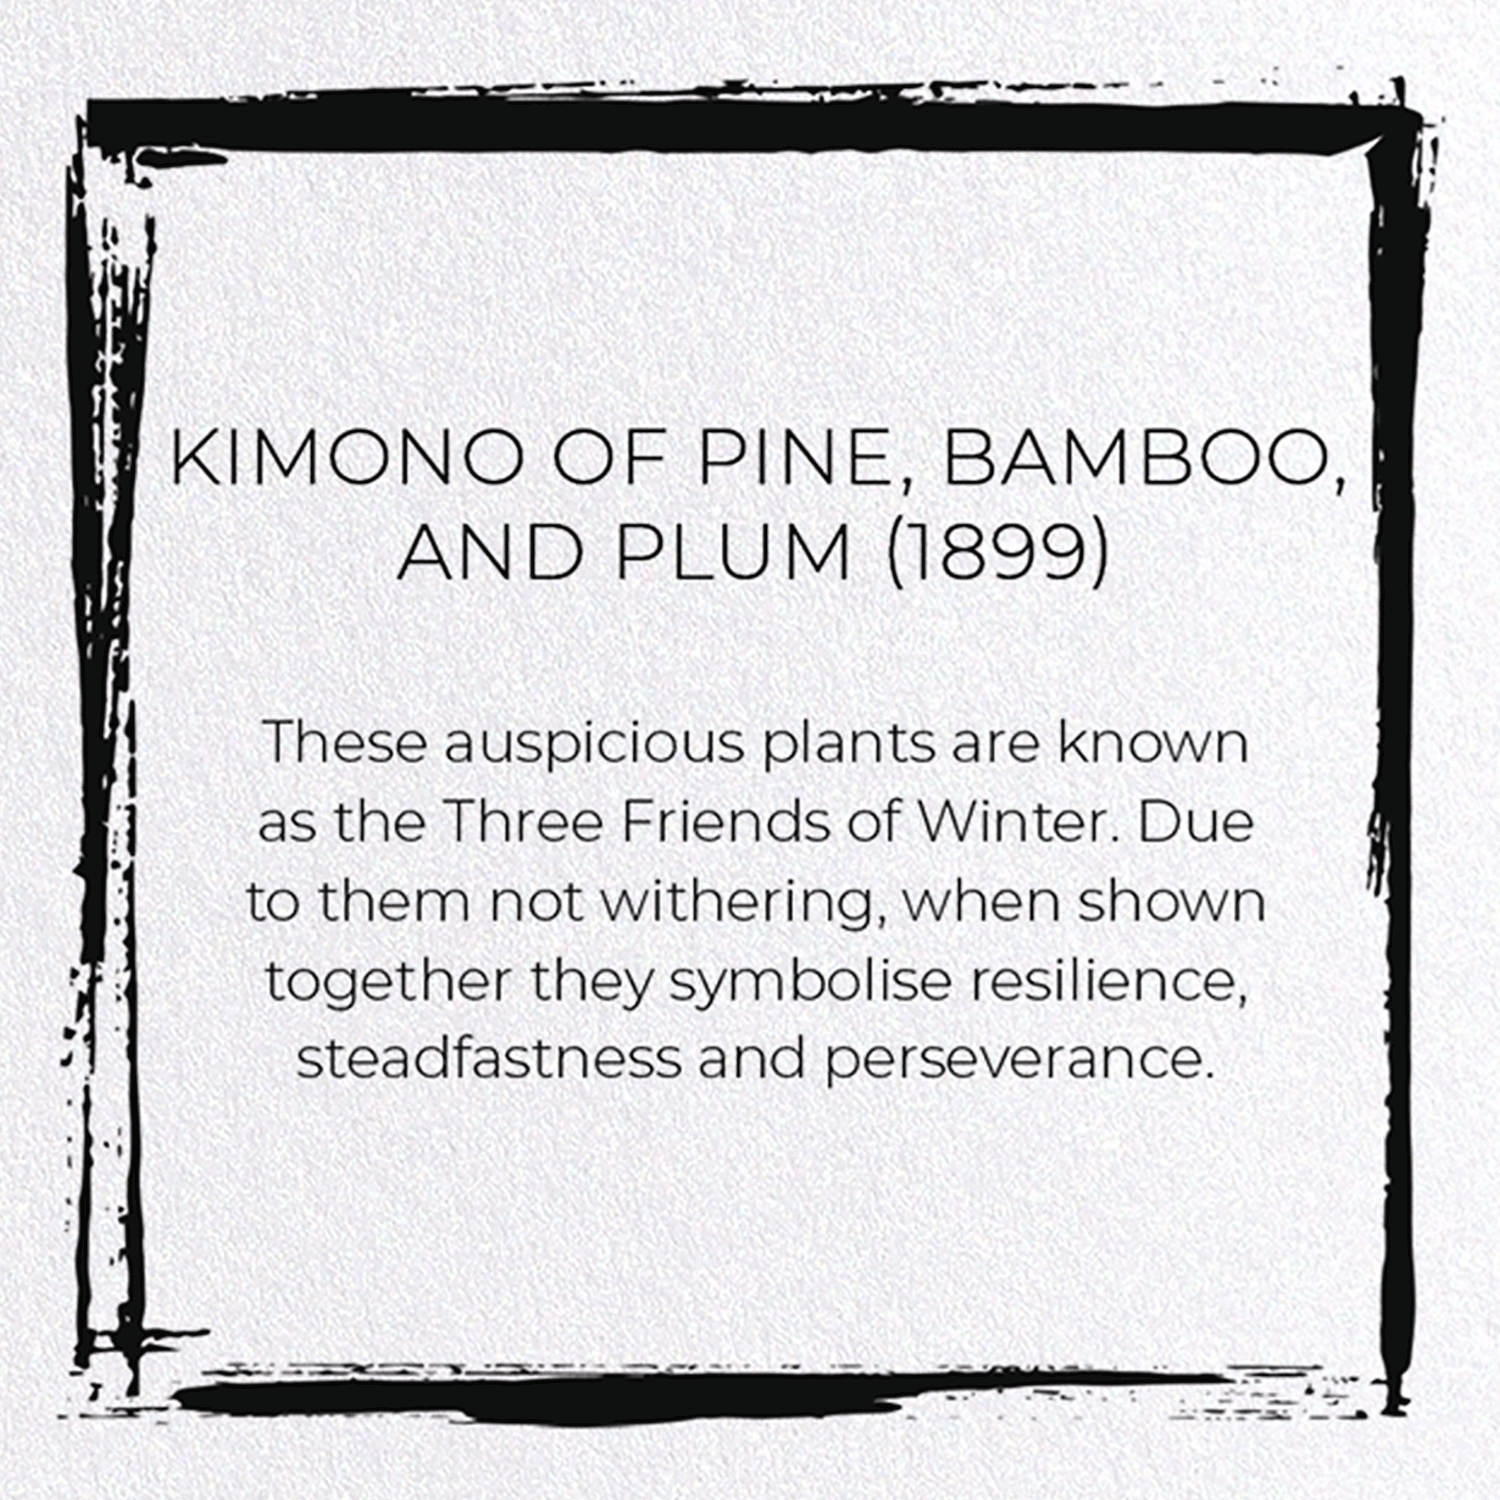 KIMONO OF PINE, BAMBOO, AND PLUM (1899)